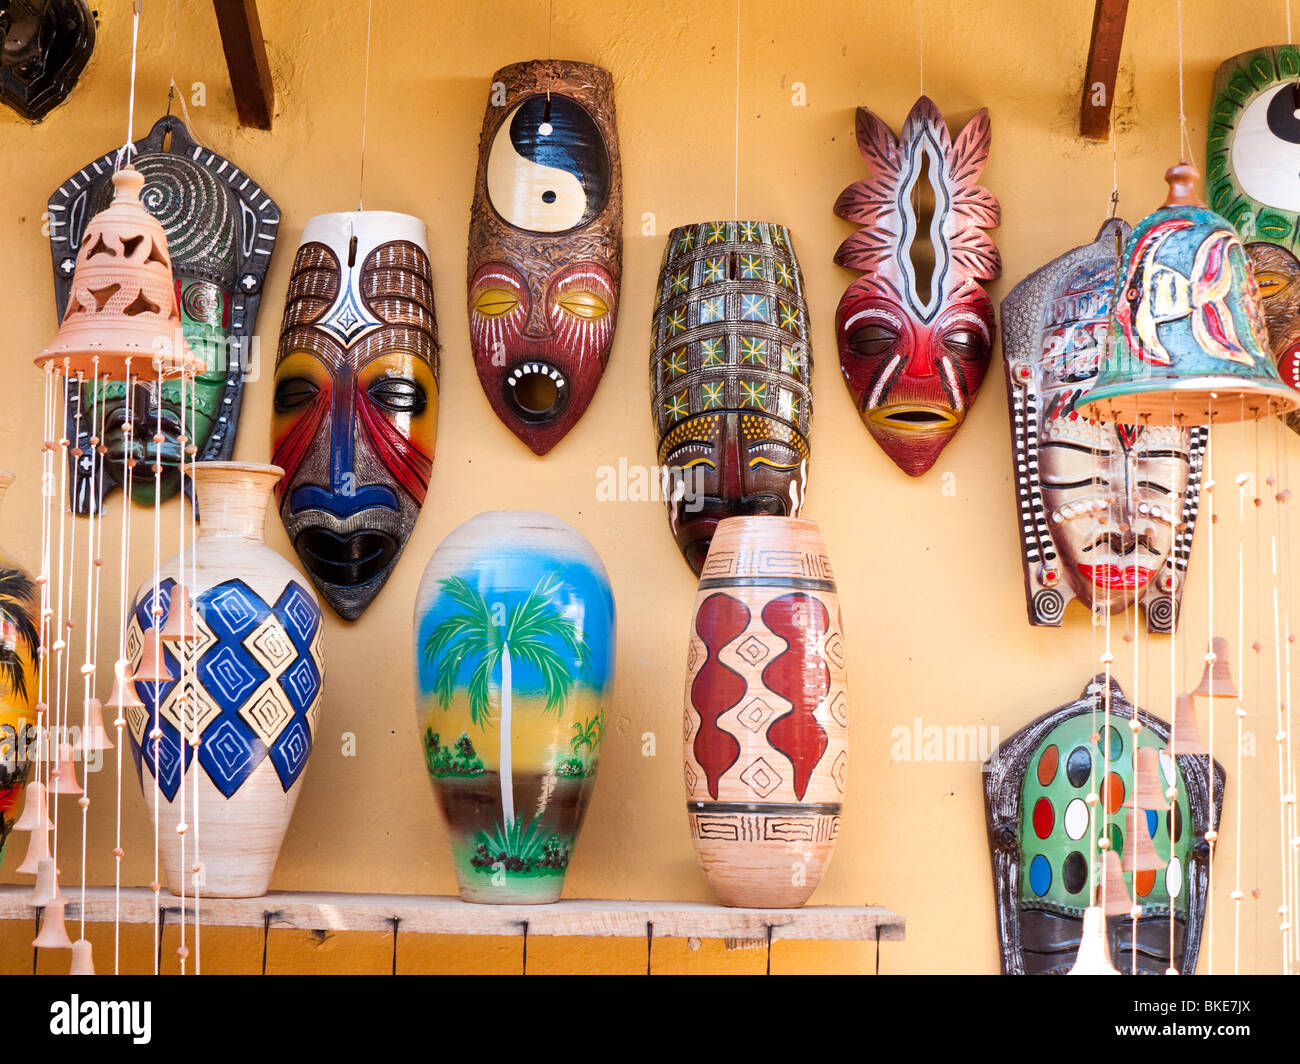 Afro-cubana e maschere di vasi in Boutique in Trinidad Street, Cuba Foto  stock - Alamy